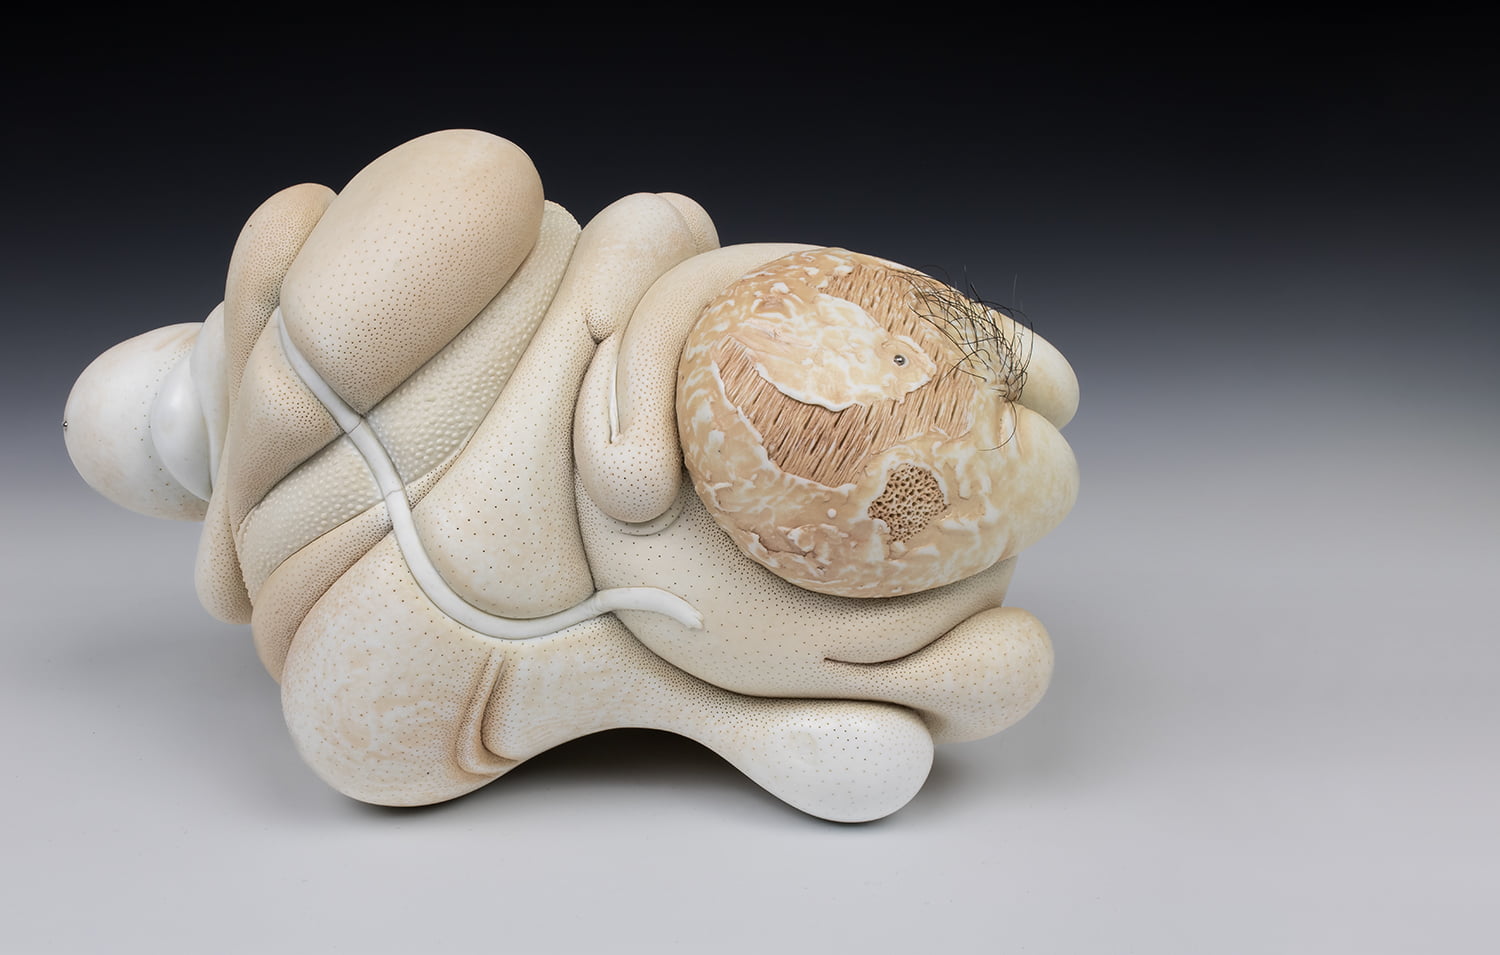 Jason Briggs "Suave" (long). porcelain, hair, and mixed media sculpture ceramics.